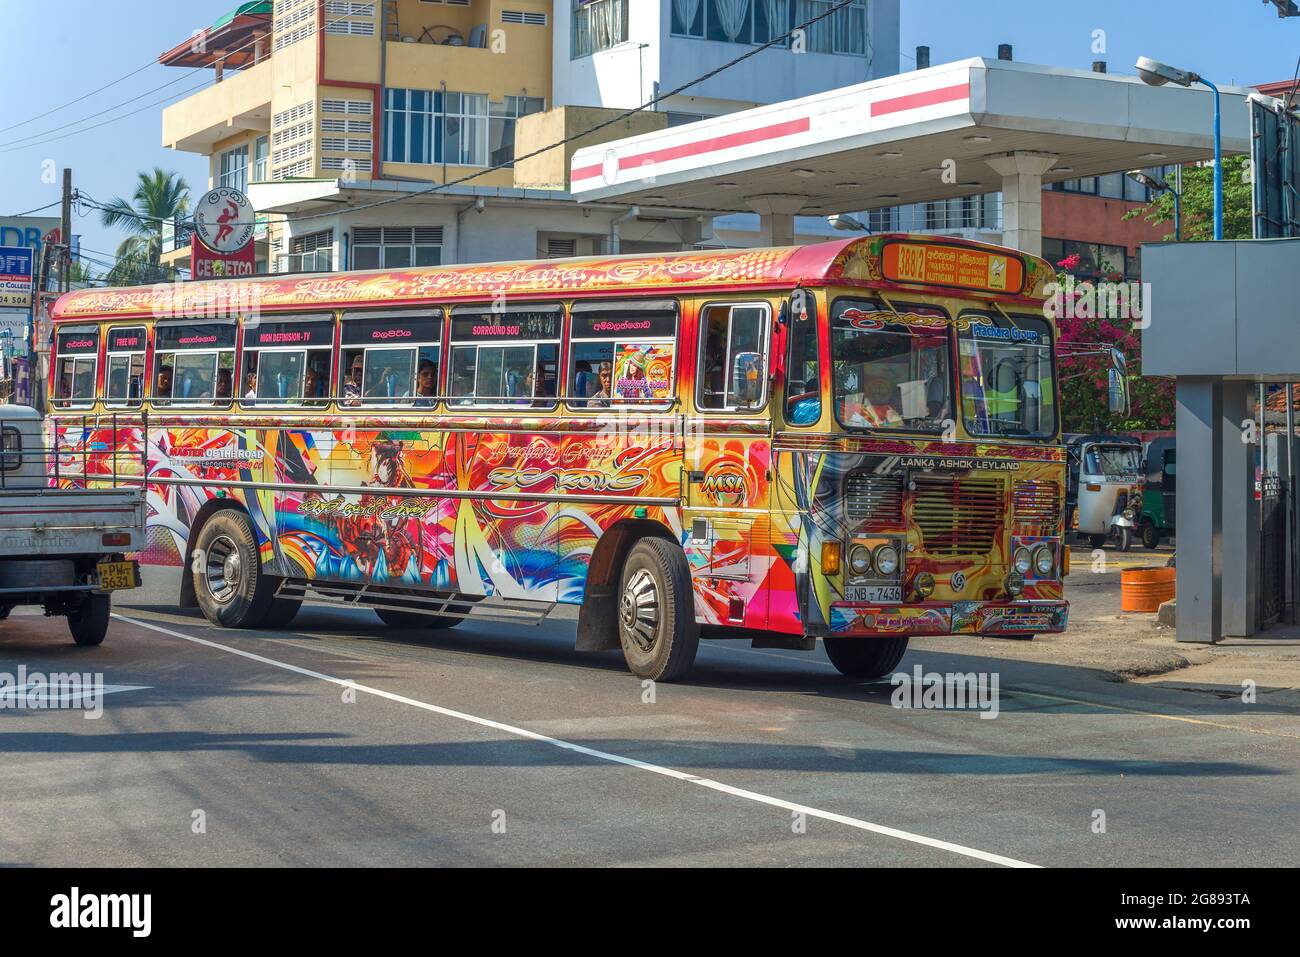 AMBALANGODA, SRI LANKA - FEBRUARY 19, 2020: Intercity bus on a city street close-up Stock Photo